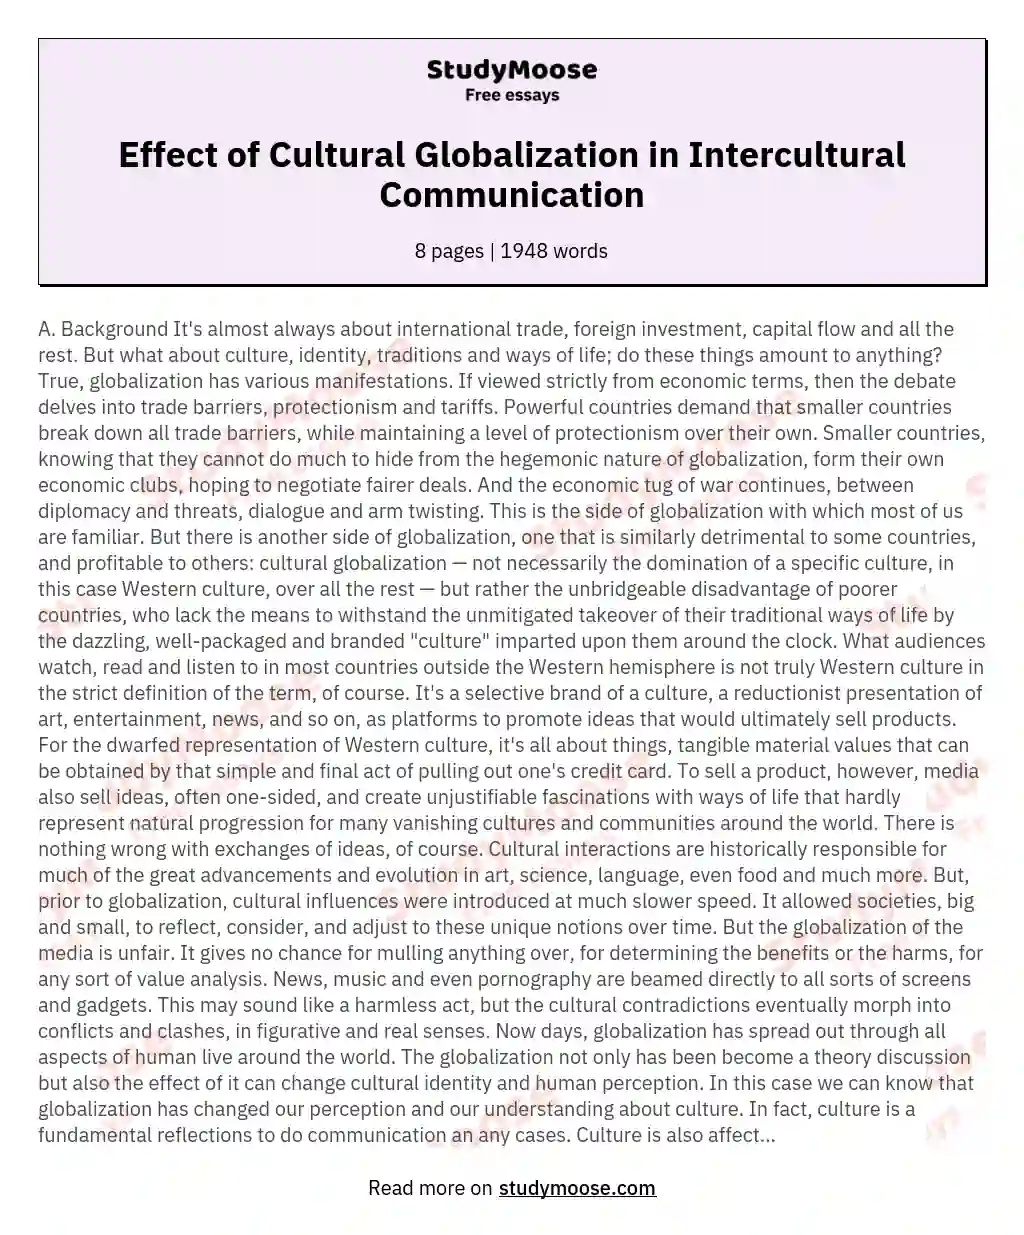 Effect of Cultural Globalization in Intercultural Communication essay